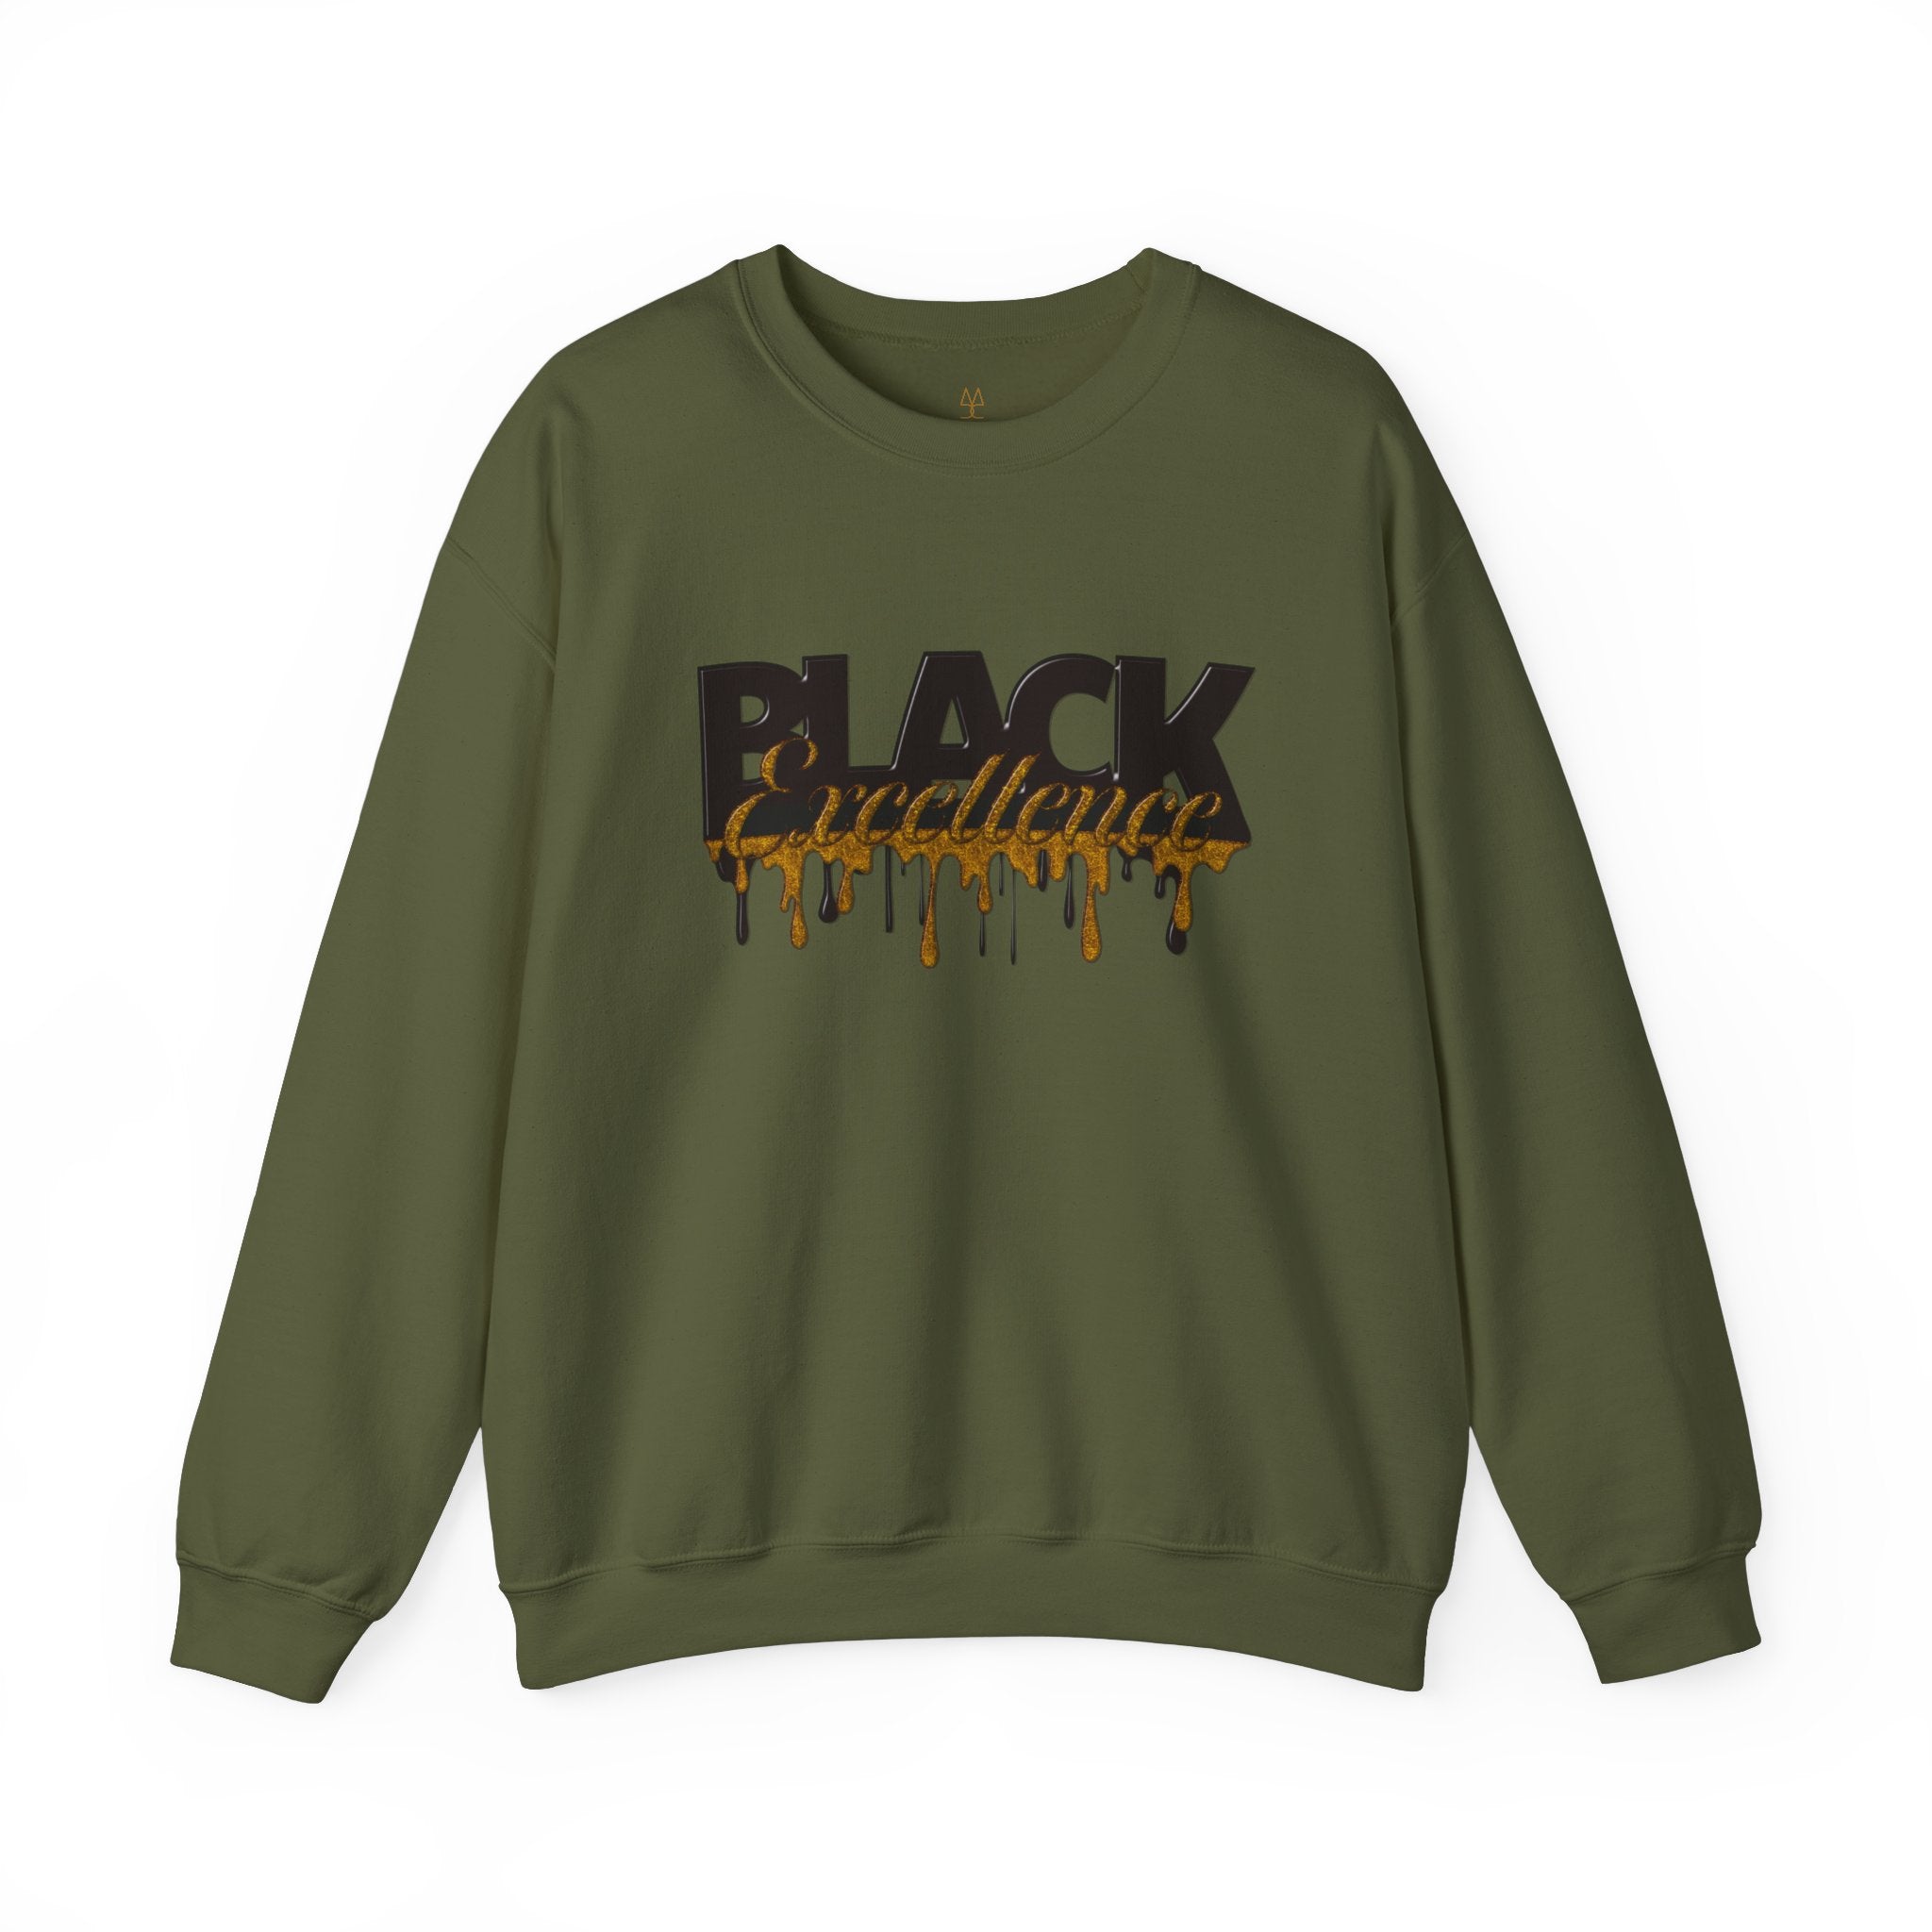 Black Excellence long sleeve sweatshirt in military green.